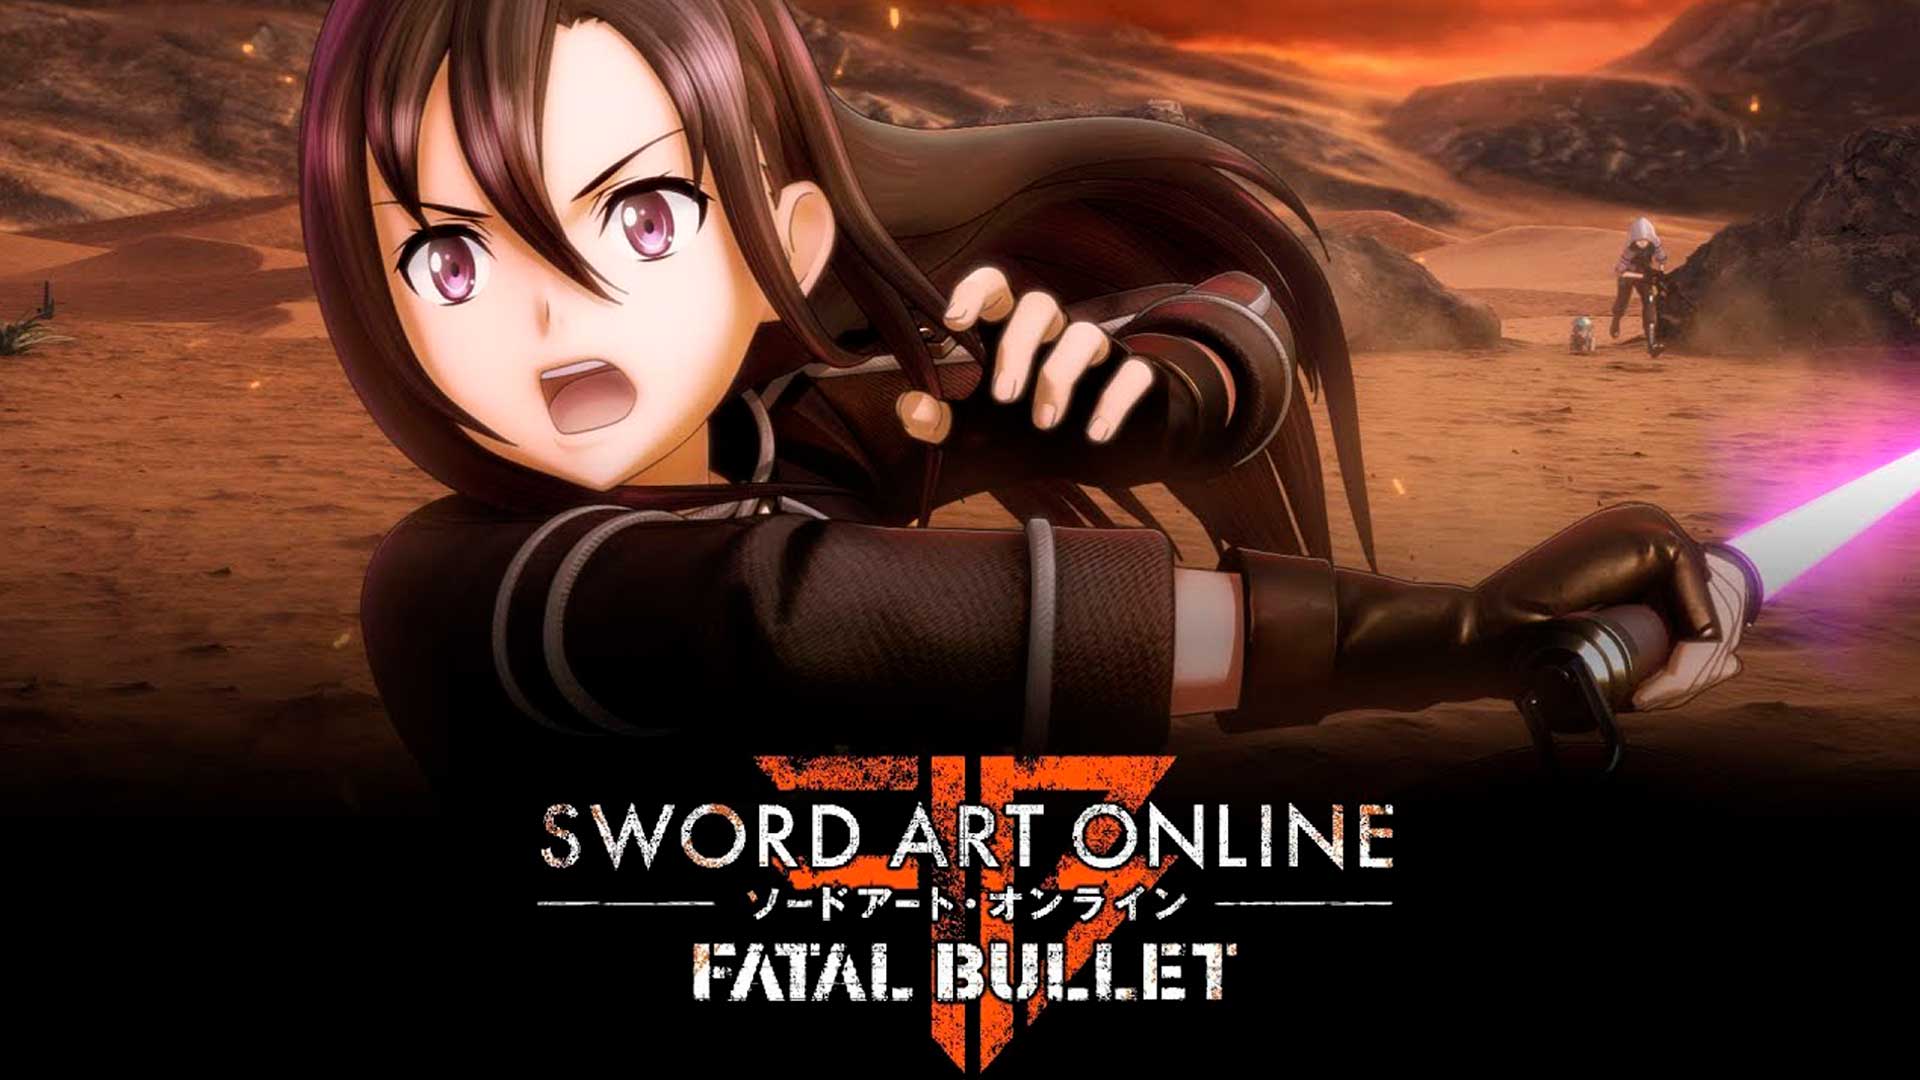 Sword Art Online Fatal Bullet Review A Decent Rpg 3rd Person Shooter Mashup